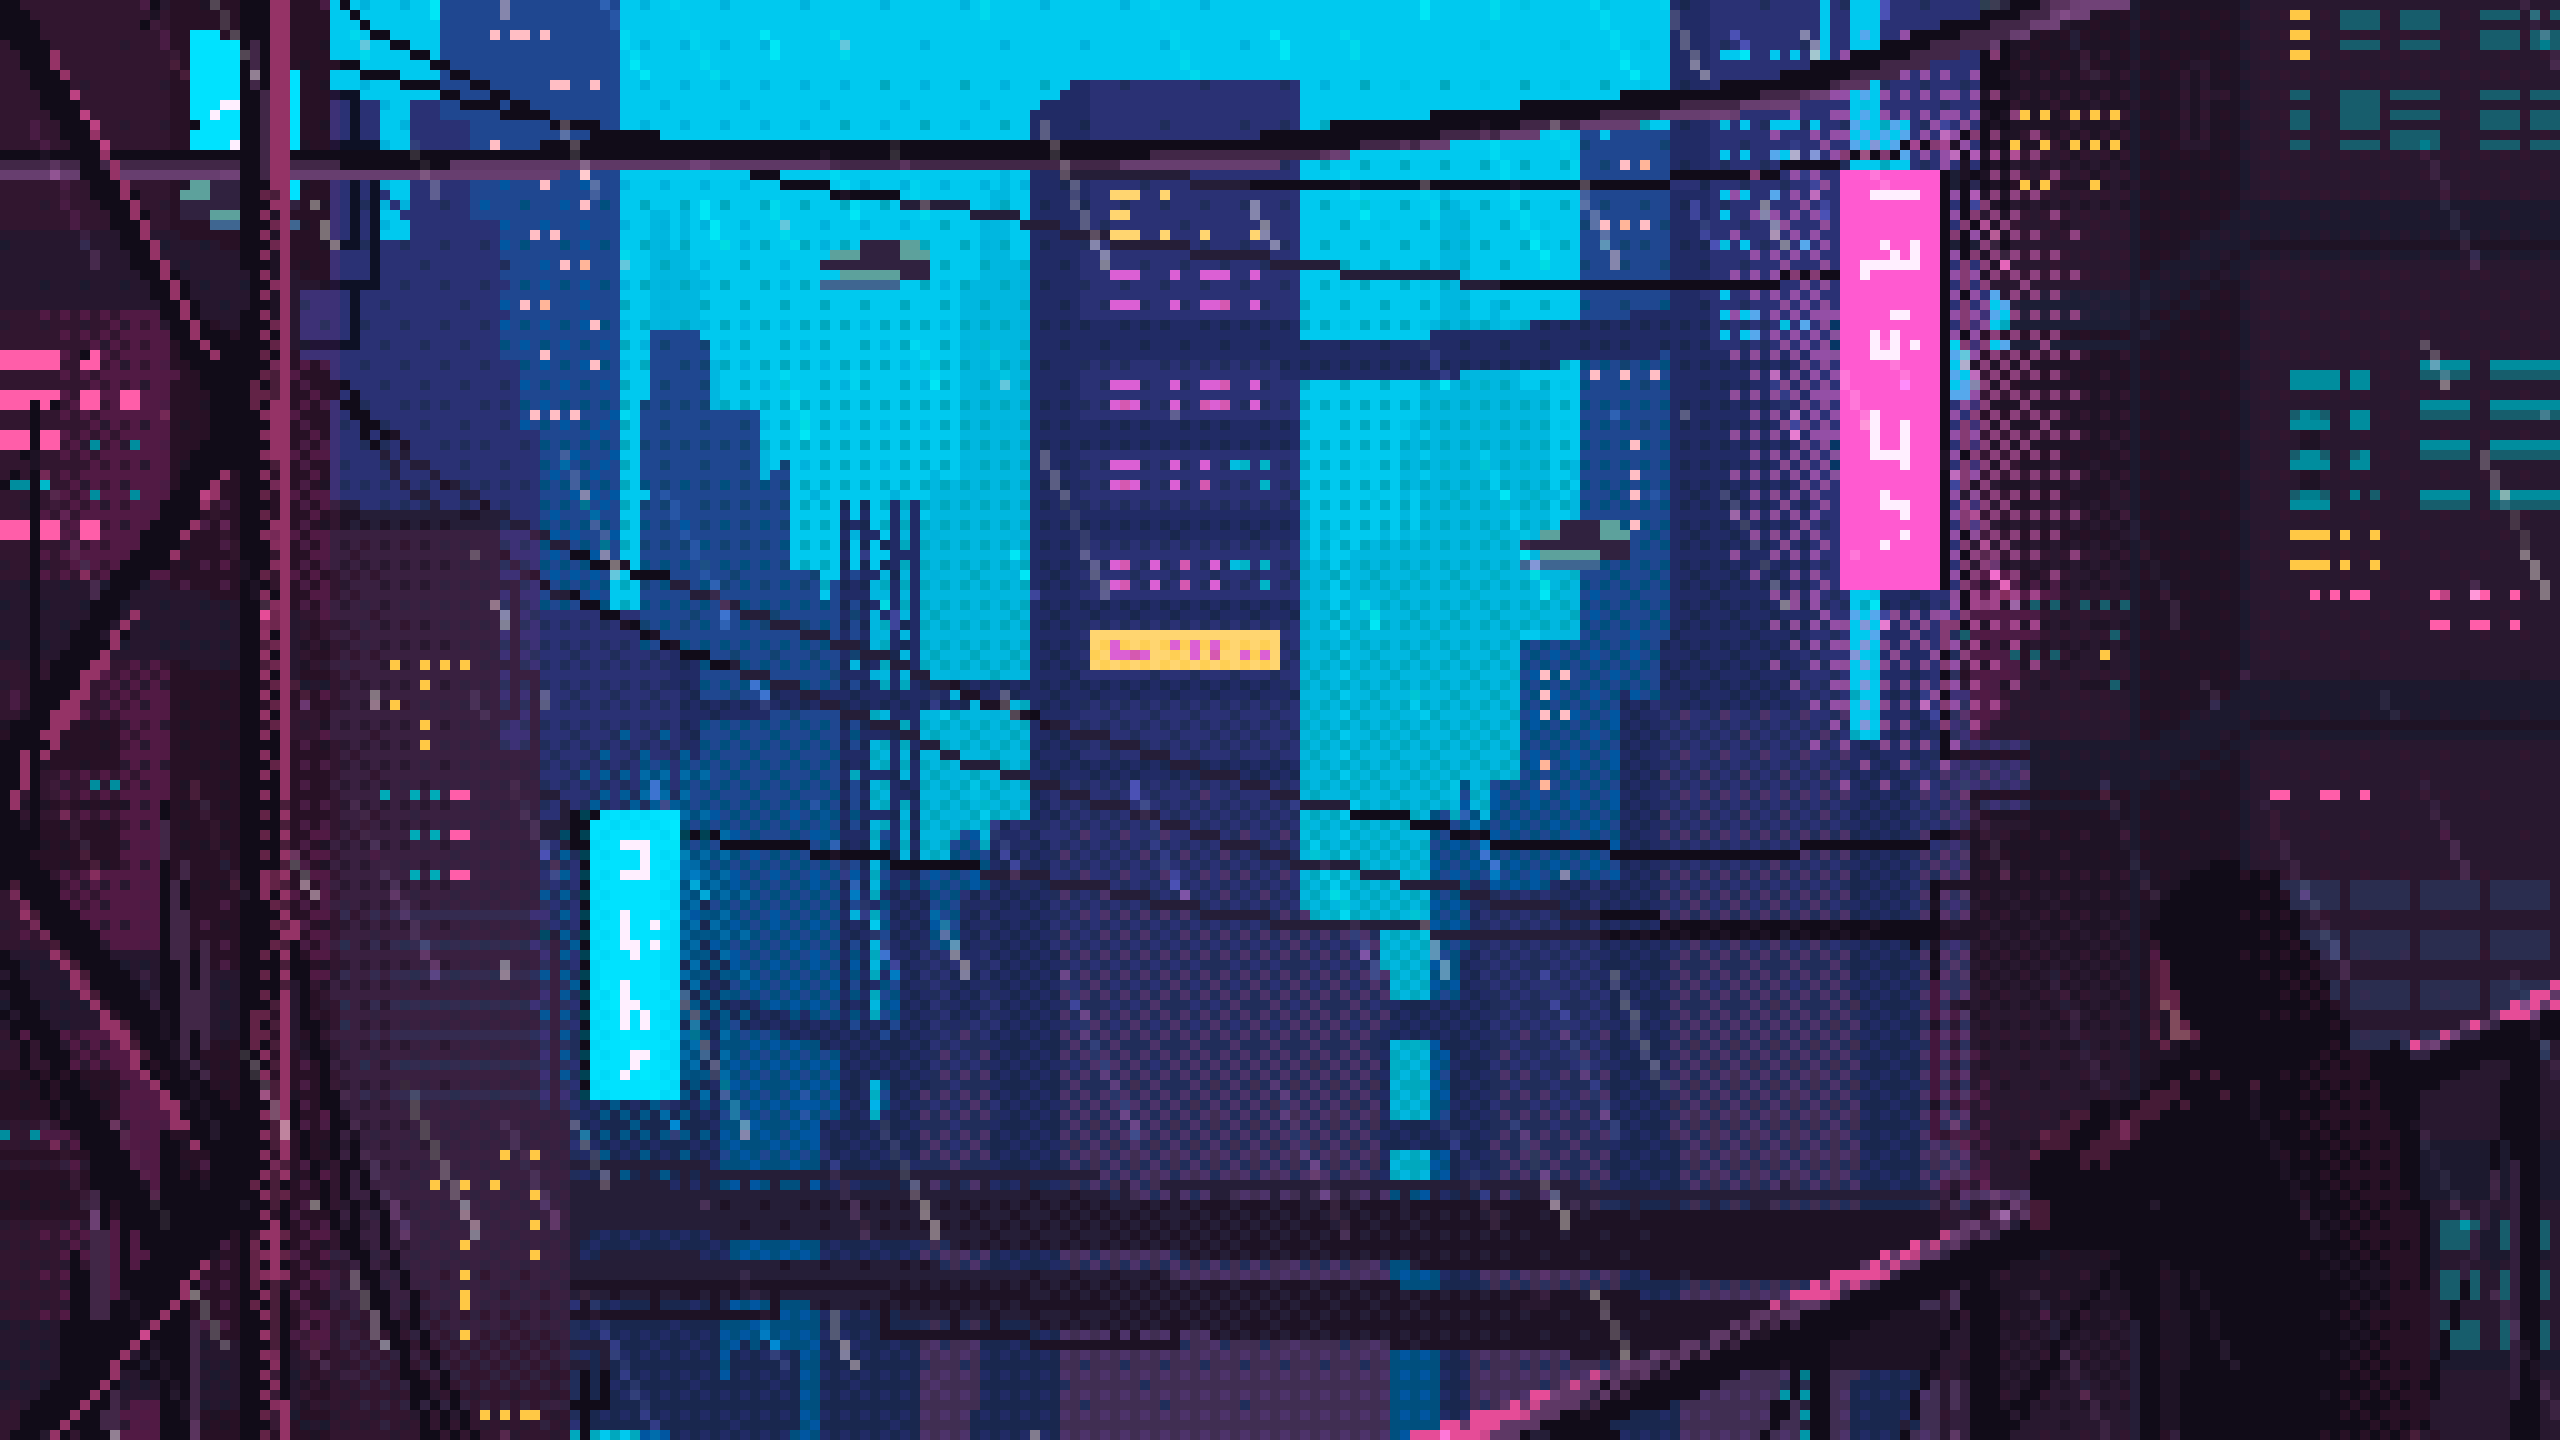 Cyberpunk inspired city